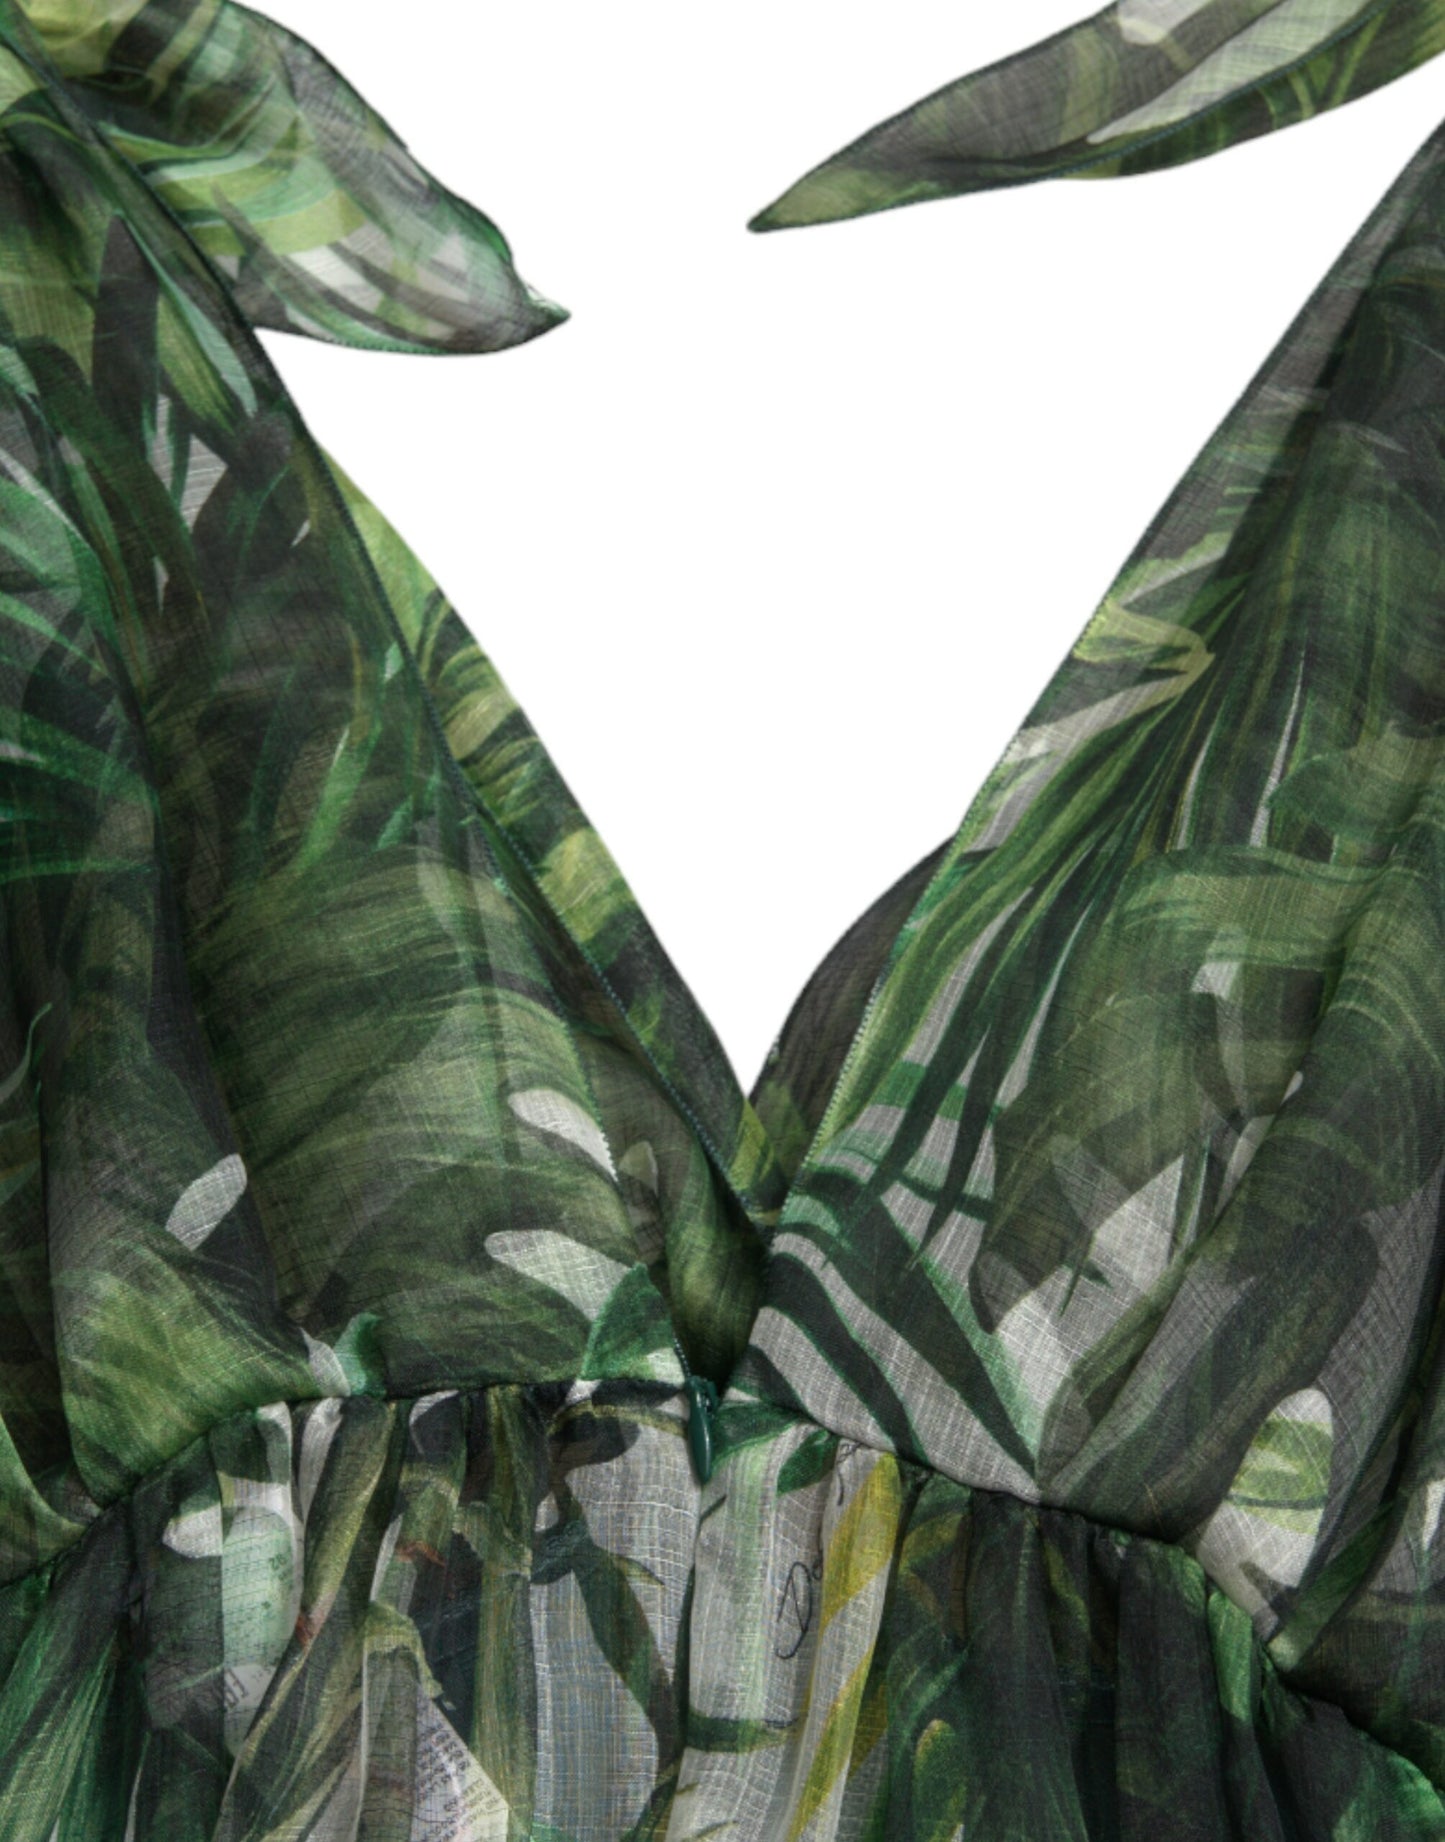 Elegant Green Silk Maxi Dress with Flocked Leaf Detail